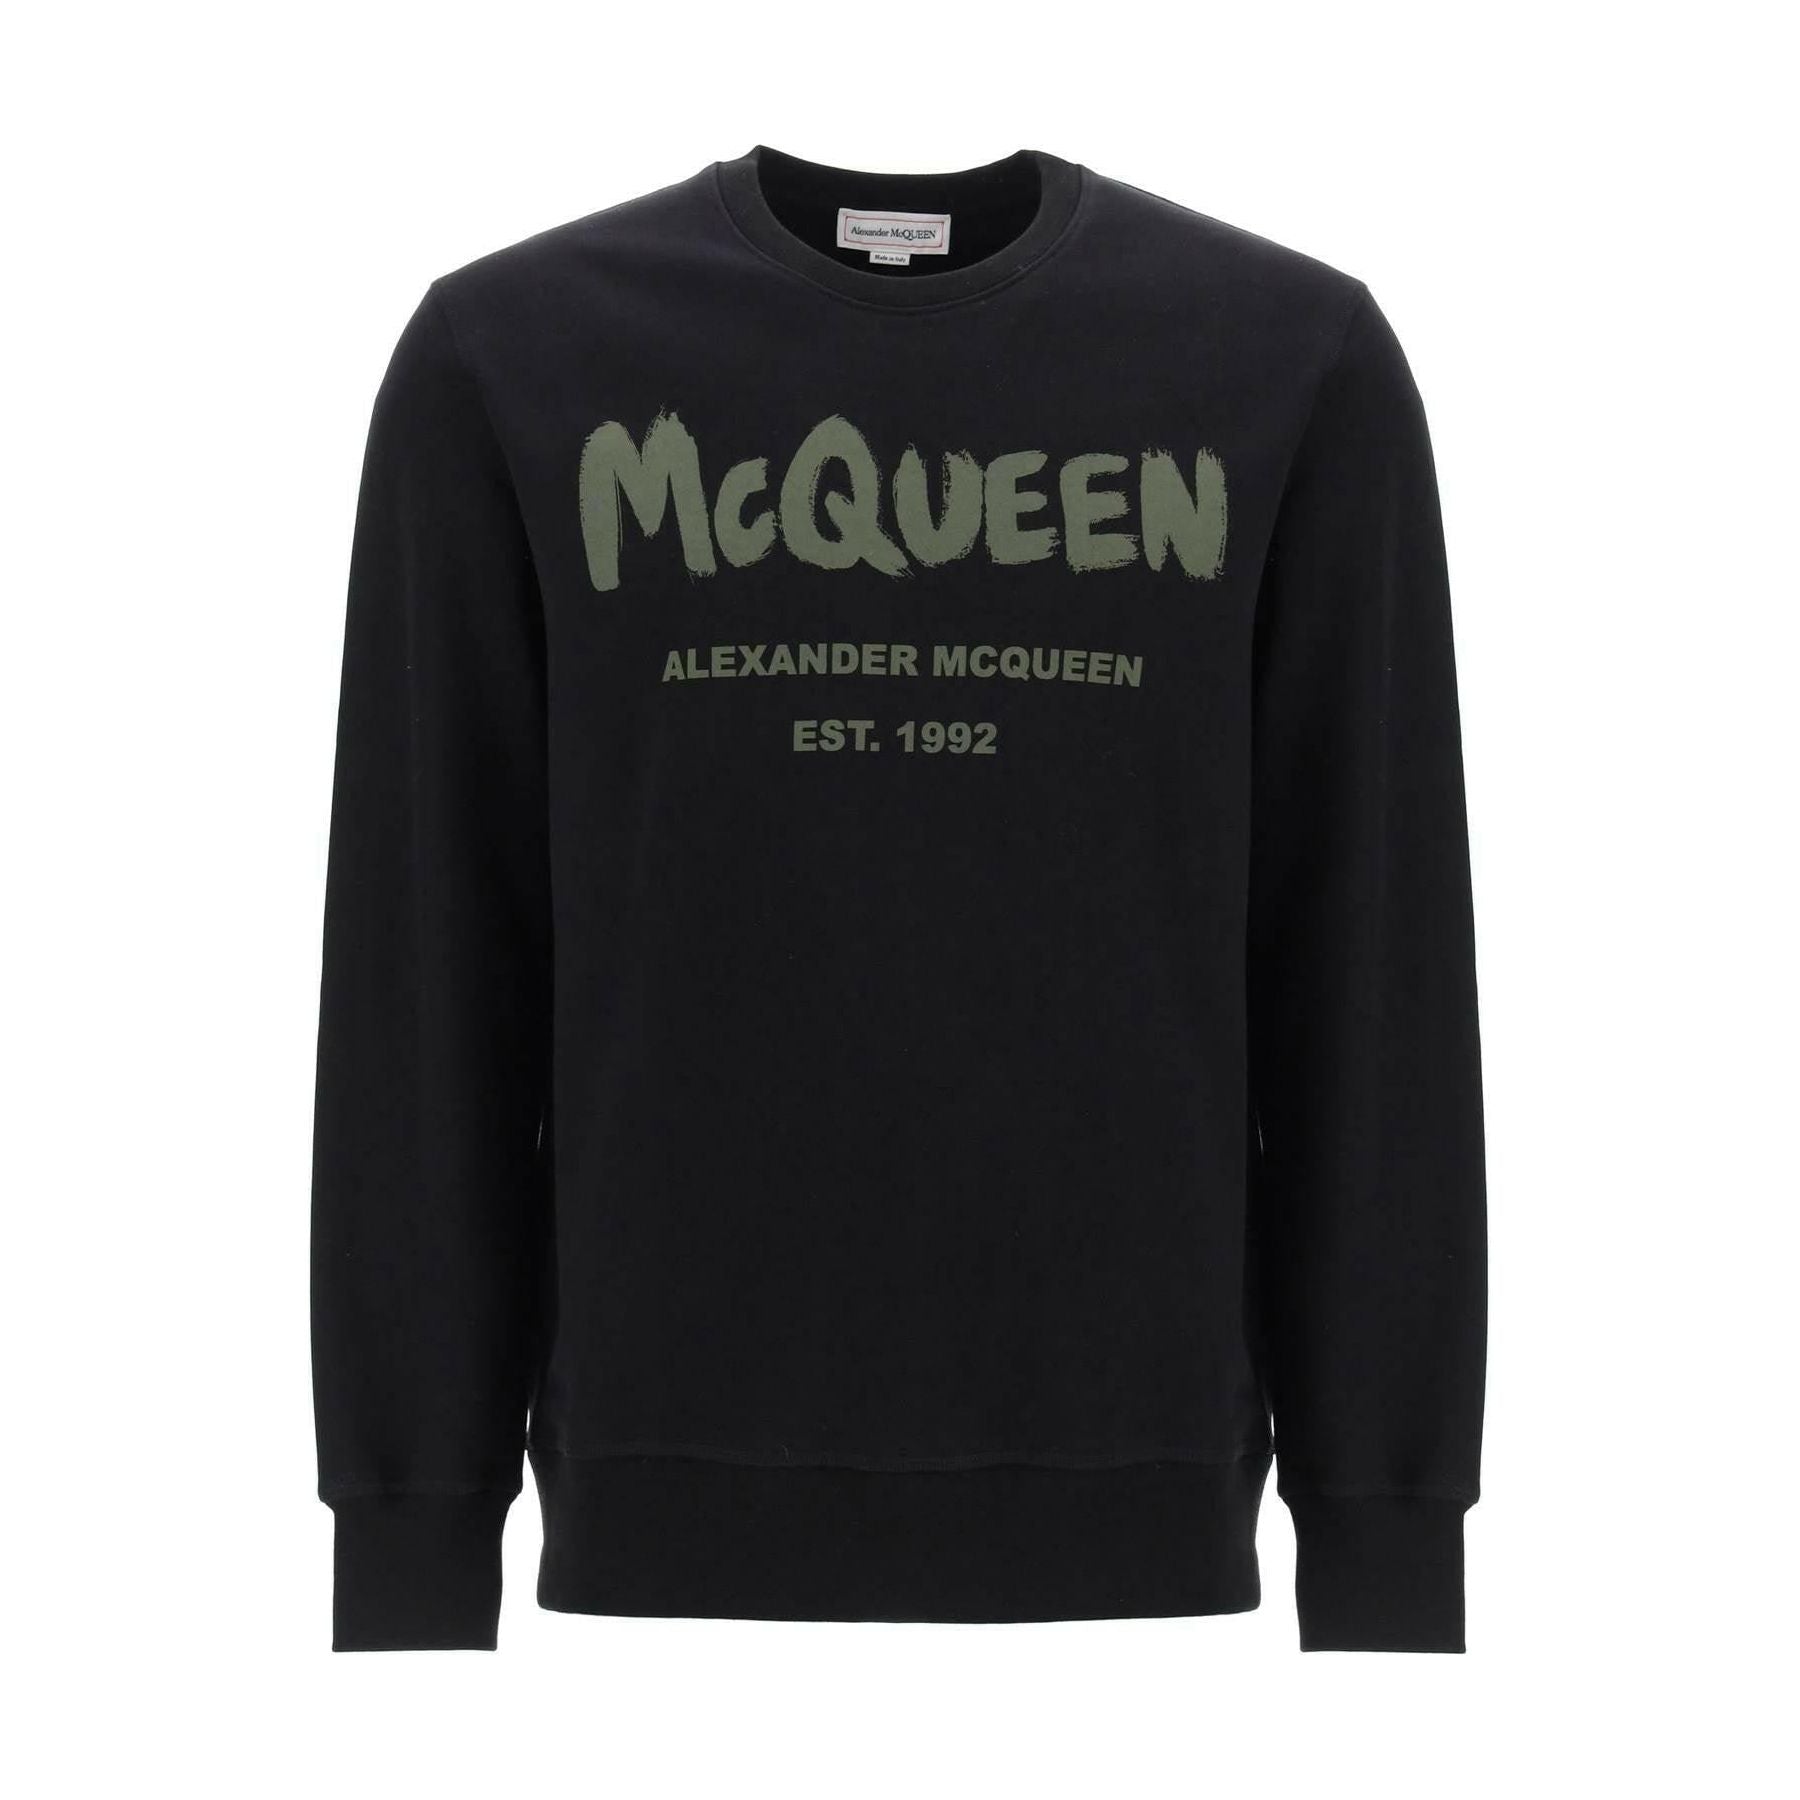 McQueen Graffiti Sweatshirt ALEXANDER MCQUEEN JOHN JULIA.